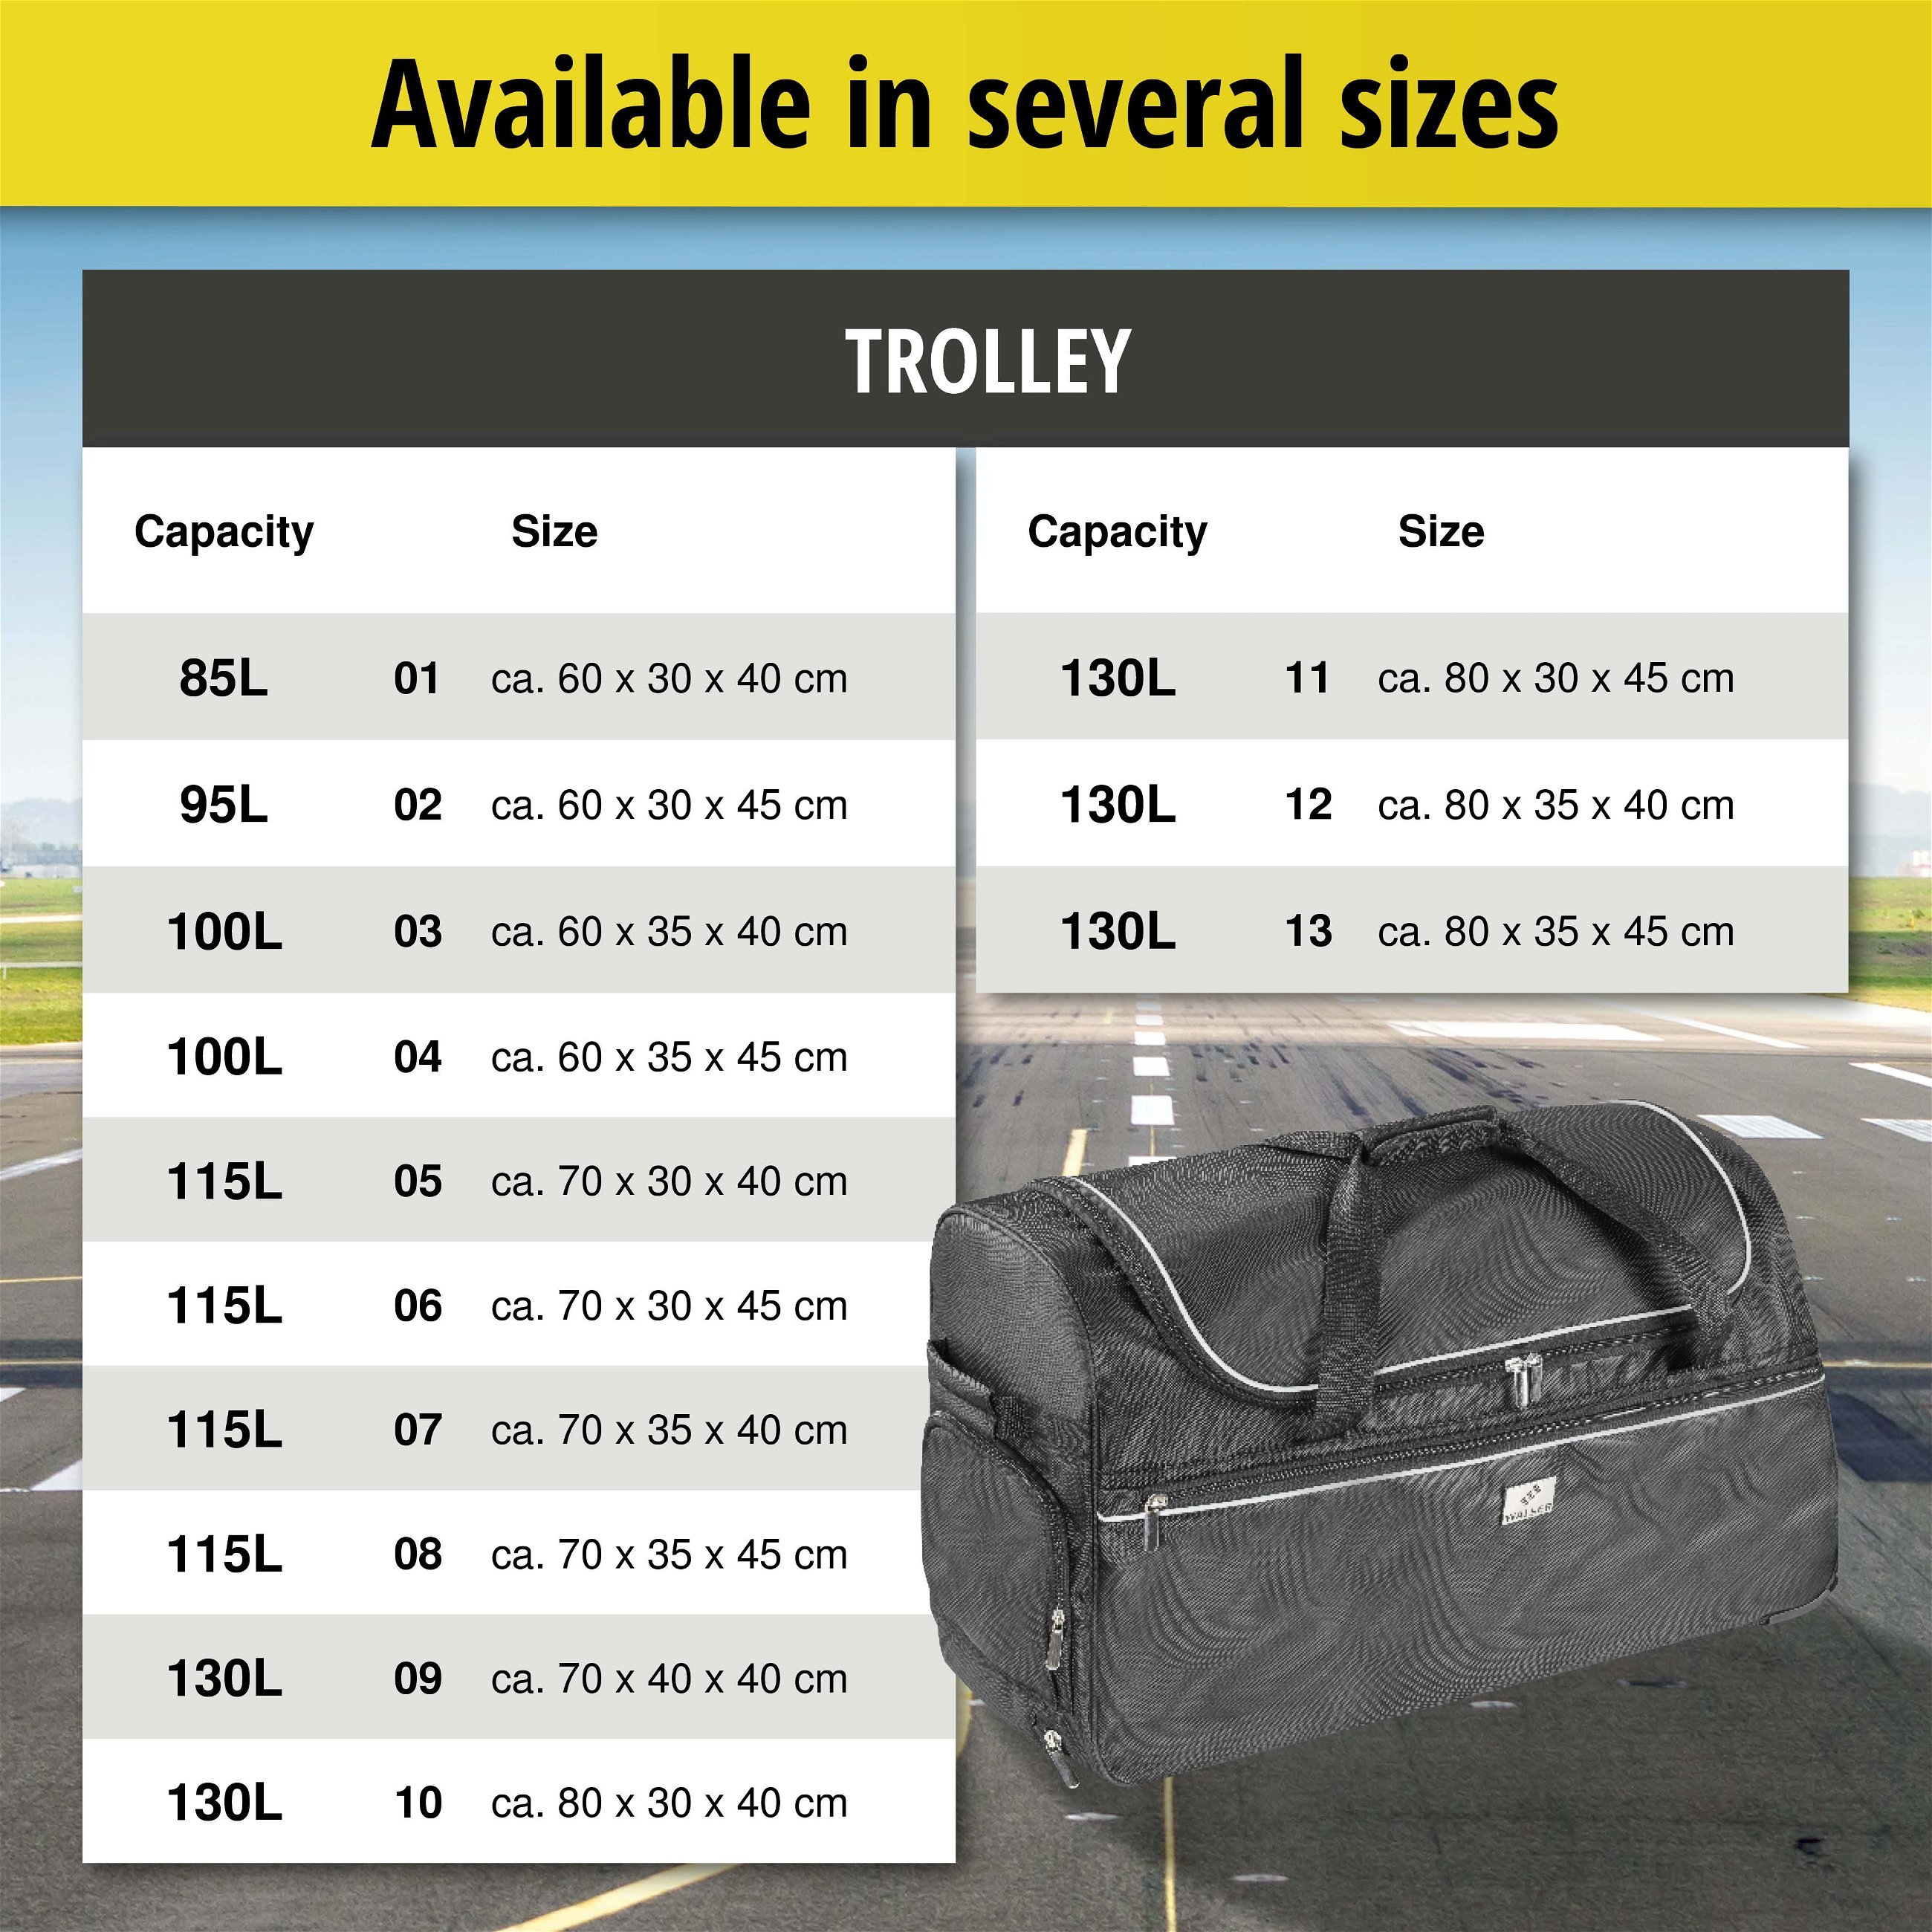 Carbags Trolley 130L - 80x35x45cm